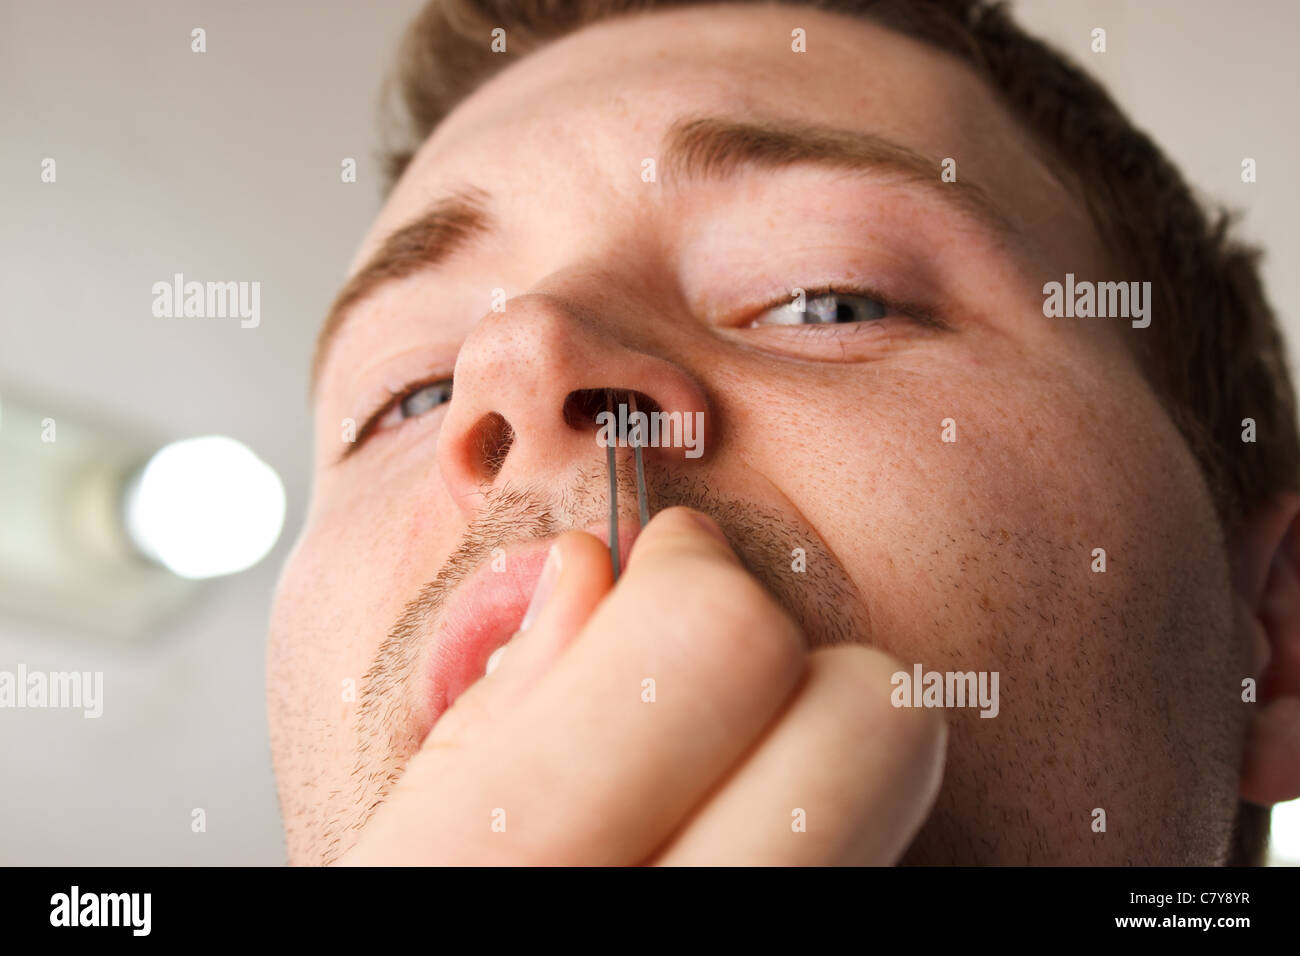 Man pucking nose hair with tweezers while facing camera Stock Photo